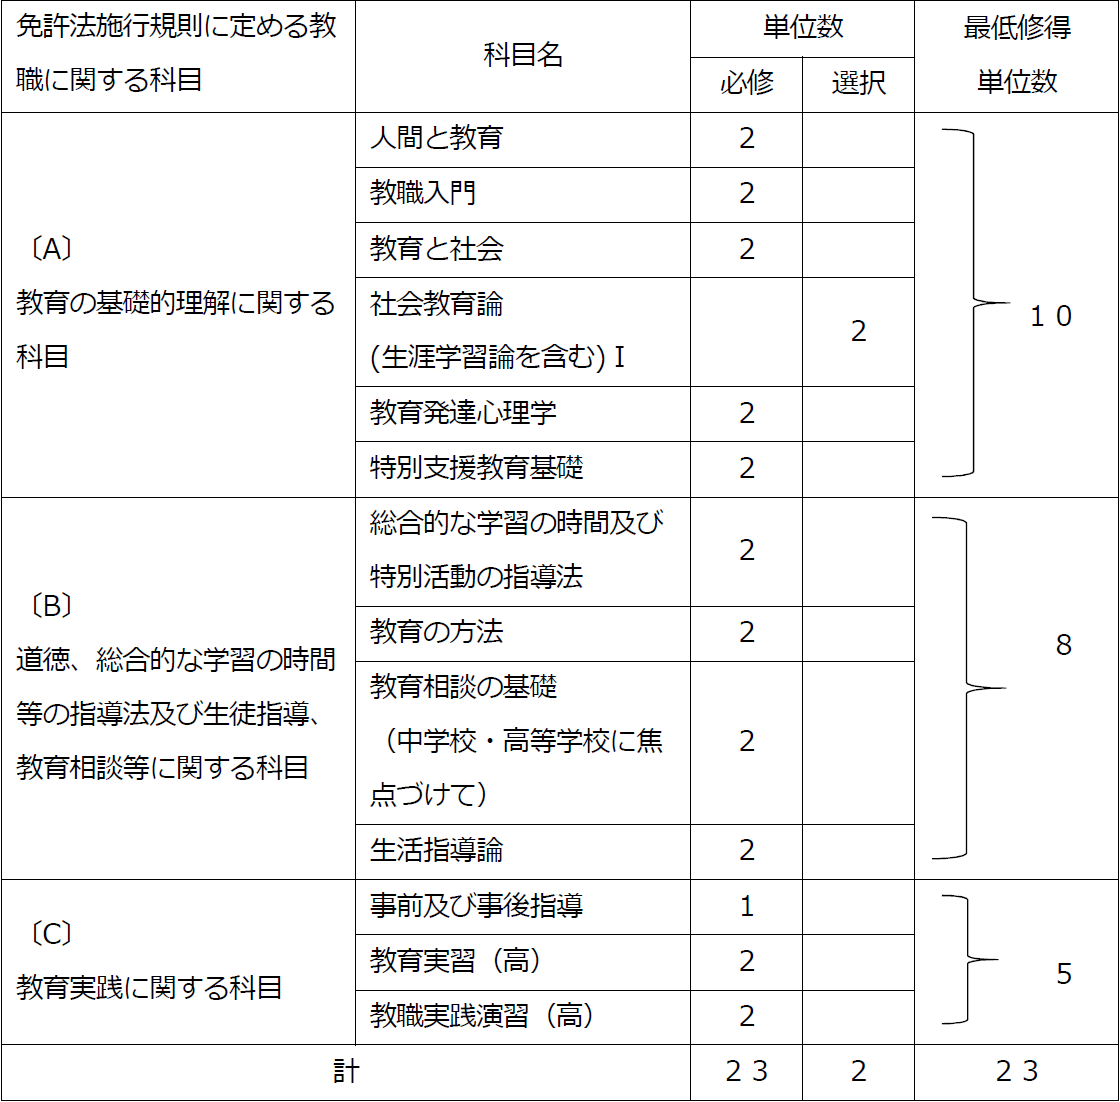 http://kyoumu.adb.fukushima-u.ac.jp/guide/2019/agri/Files/2020/03/%E6%95%99%E5%93%A1%E5%85%8D%E8%A8%B1%E5%8F%96%E5%BE%97%E3%80%80%E8%A1%A8%EF%BC%93200303.png